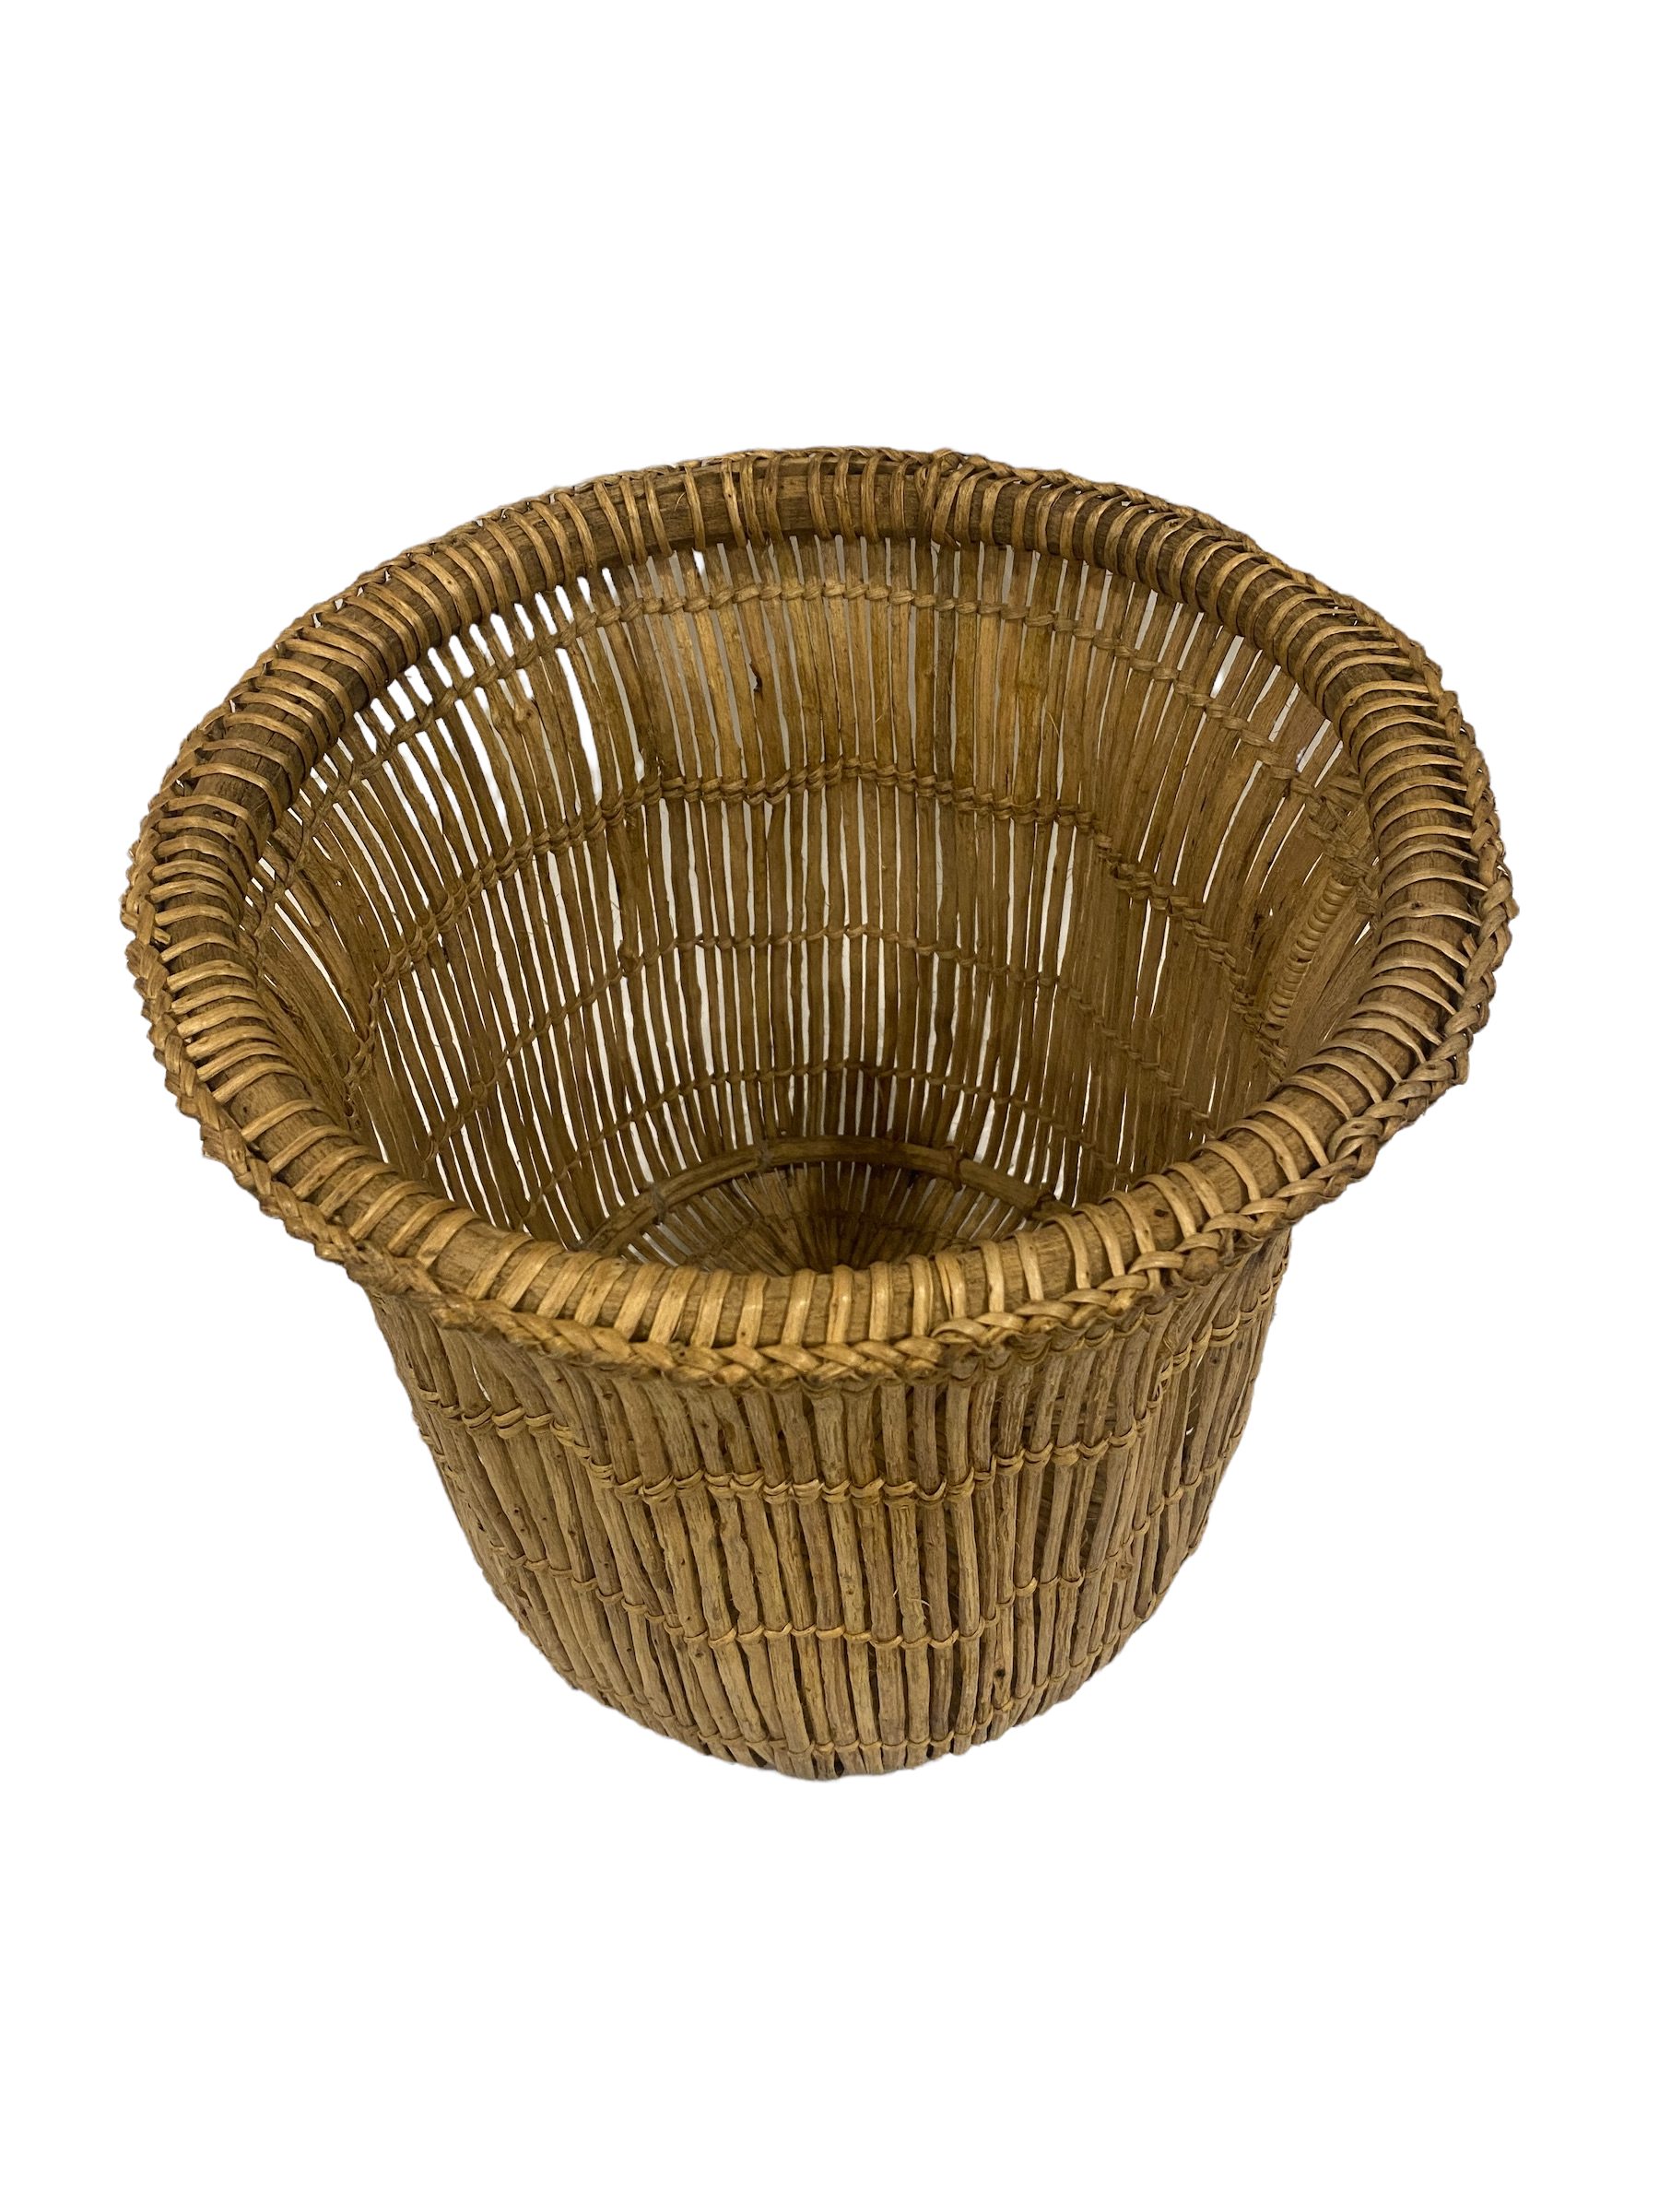 Fishing Basket - Tanzania very large - Botanical Boys